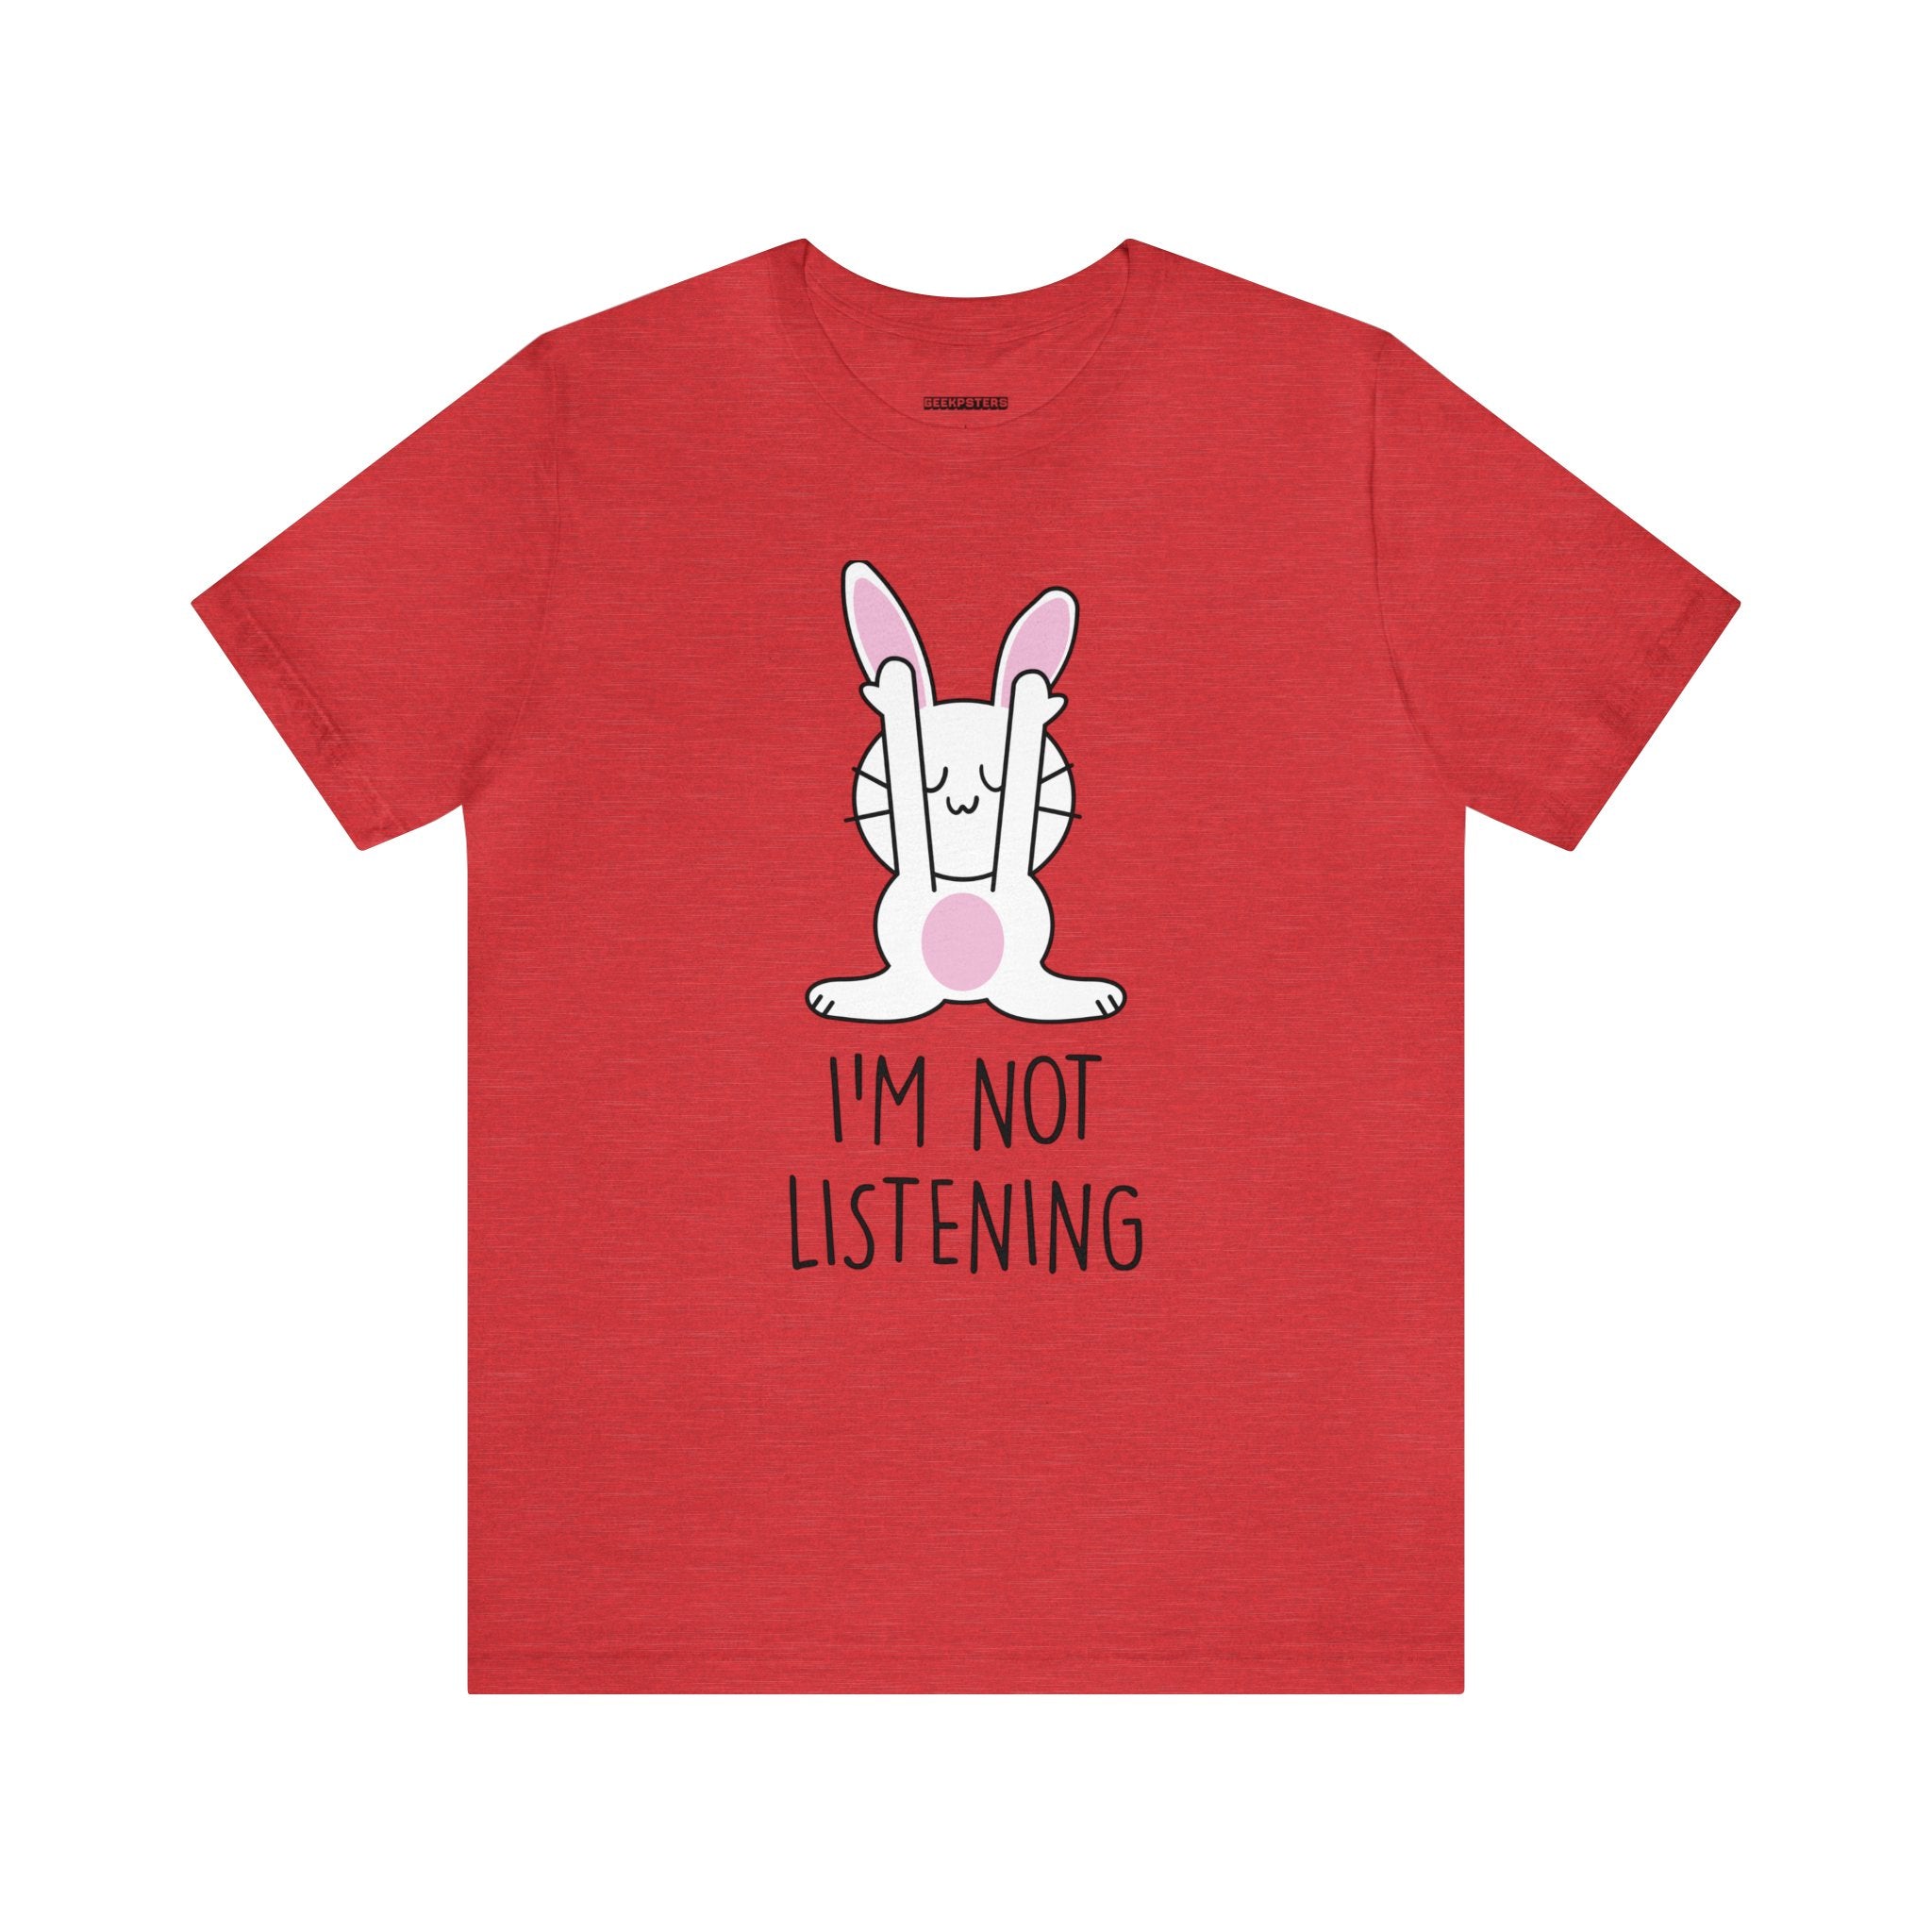 A "I'm Not Listening" statement t-shirt.